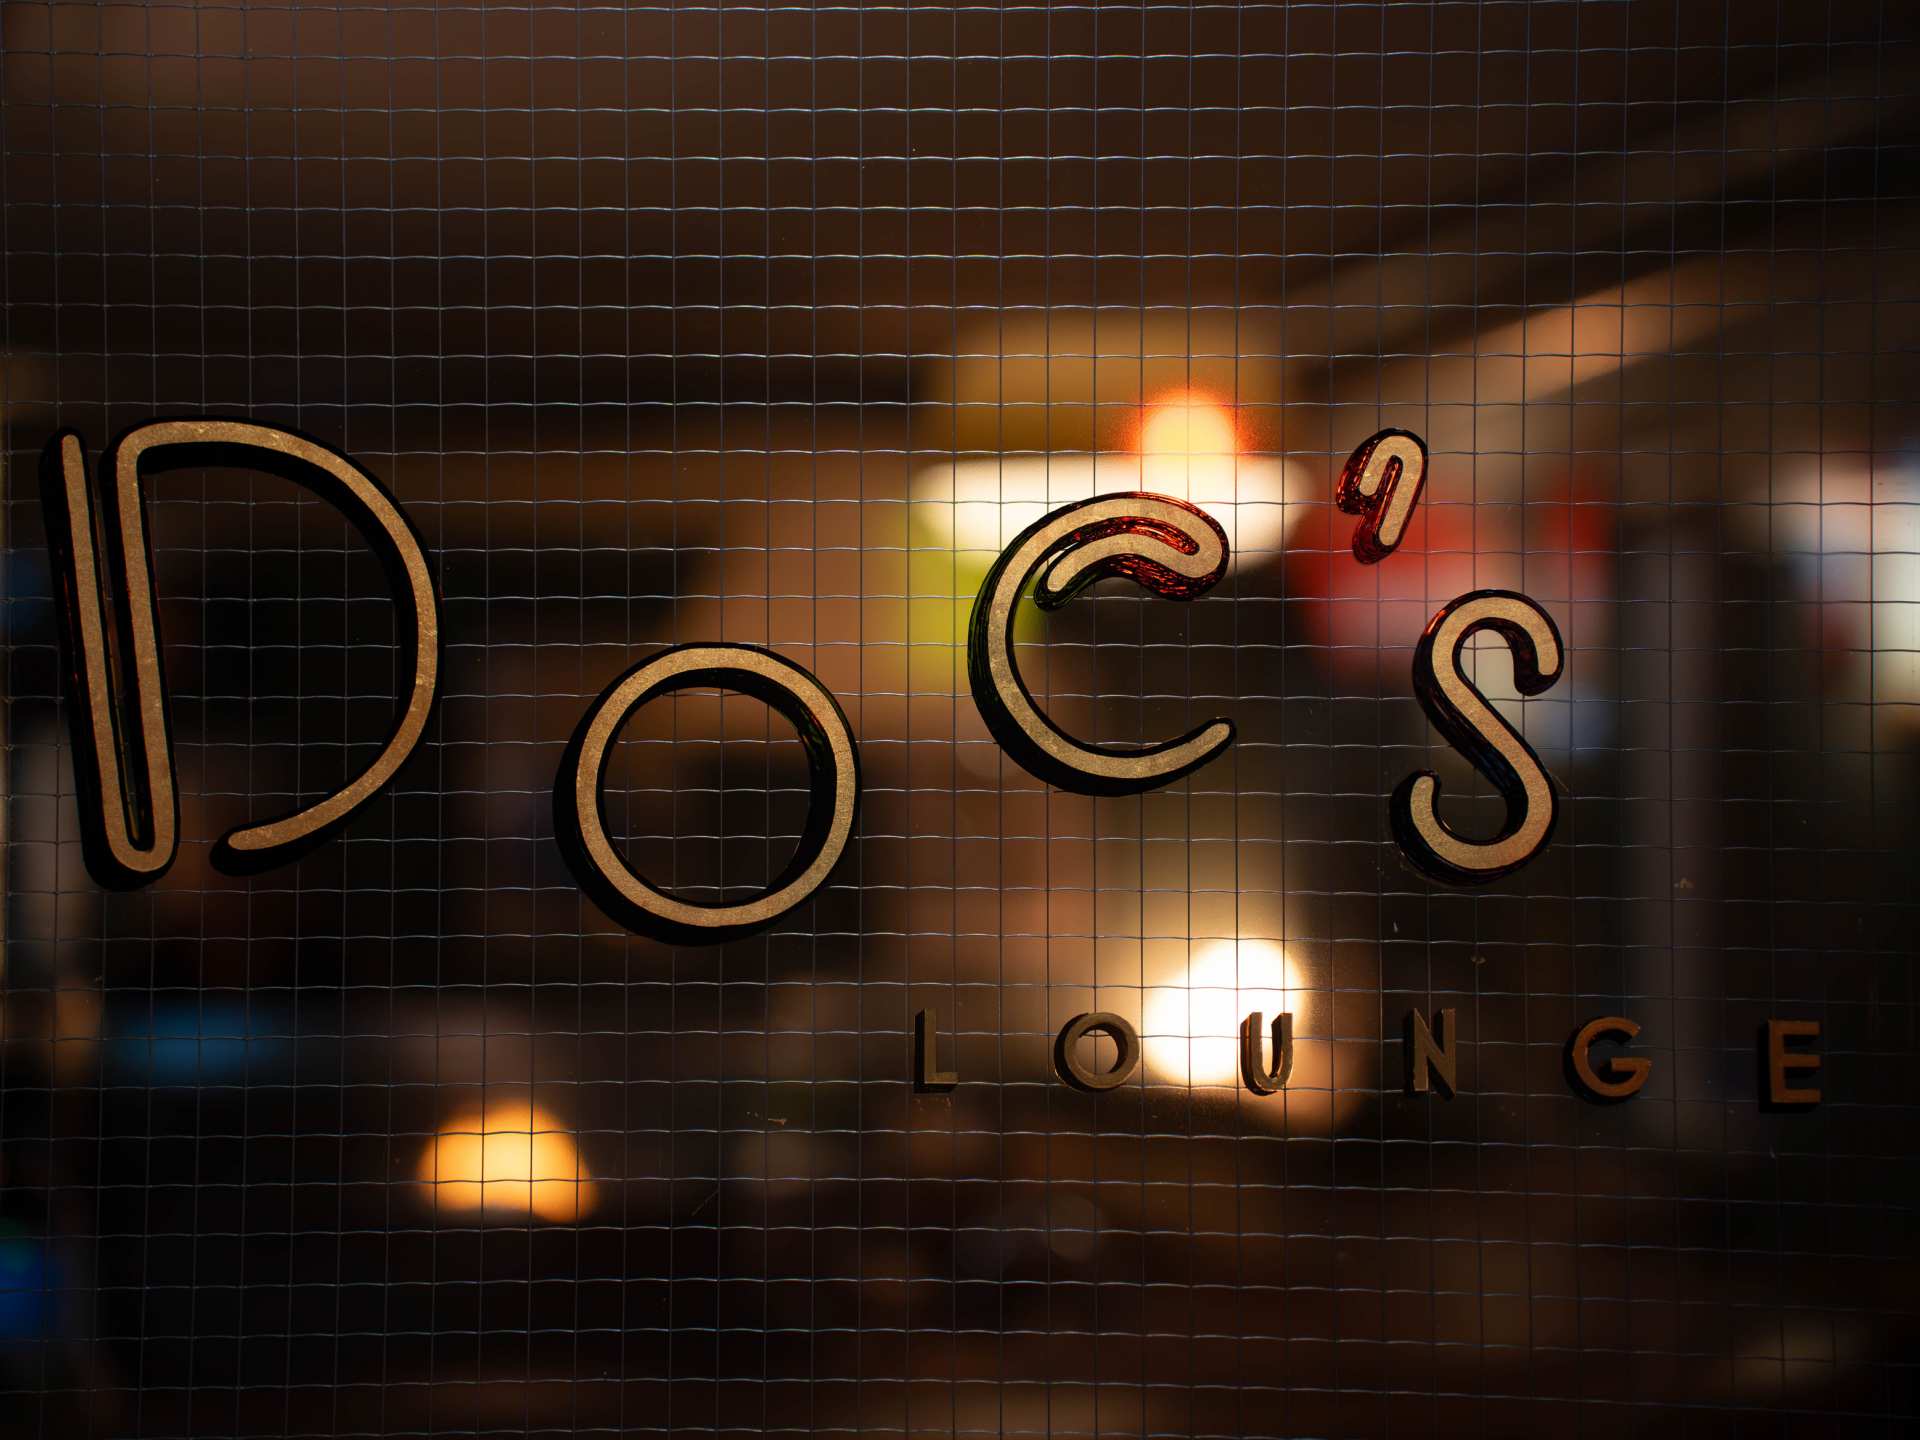 Doc’s Green Door Lounge | The sign outside Doc’s Green Door Lounge